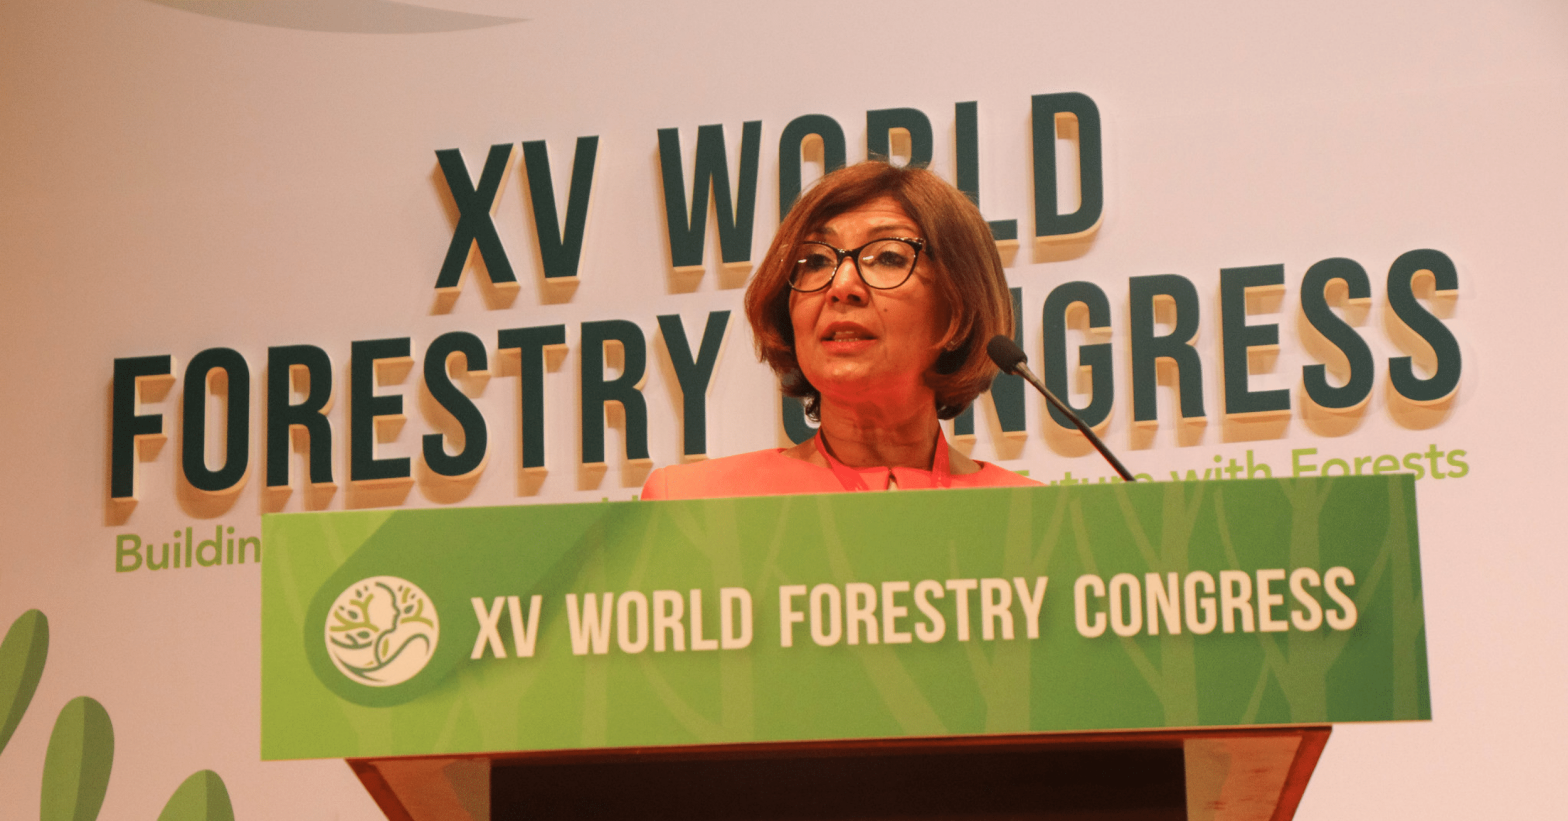 Maria Helena Semedo, Deputy Director-General, FAO at the XV World Forestry Congress. Photo: Pilar Valbuena (FAO)